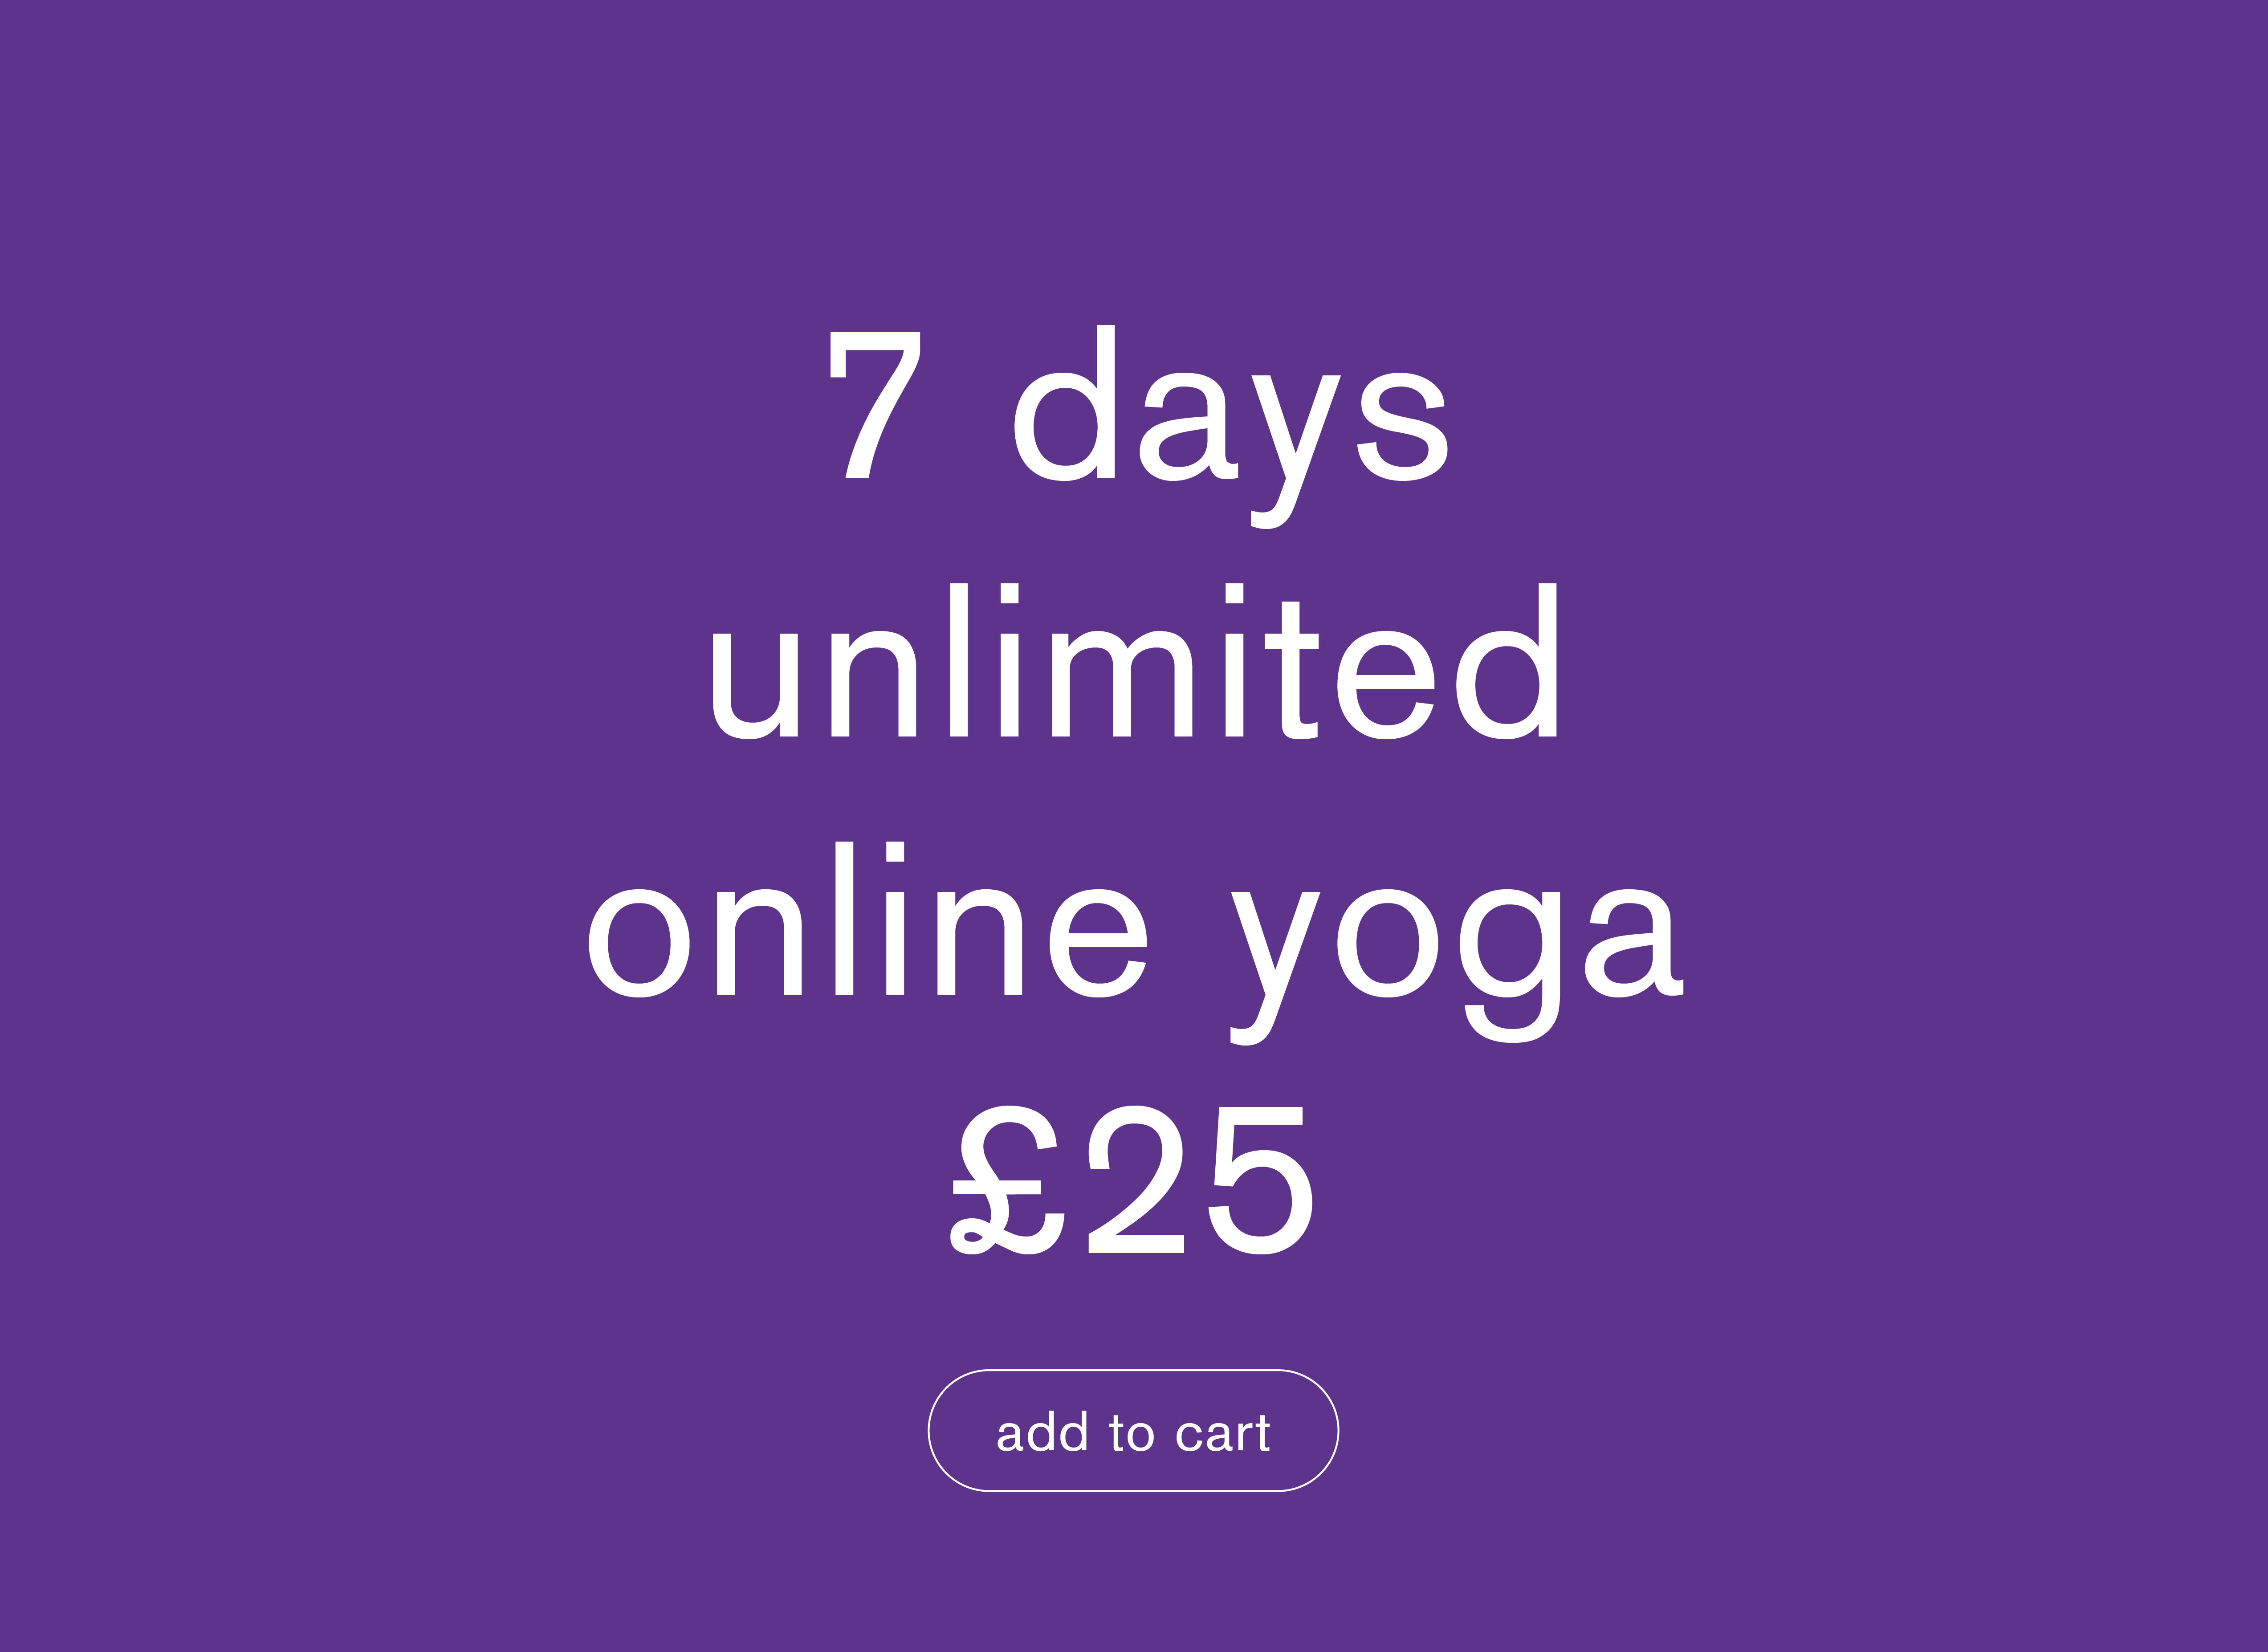 7 days unlimited online yoga £25